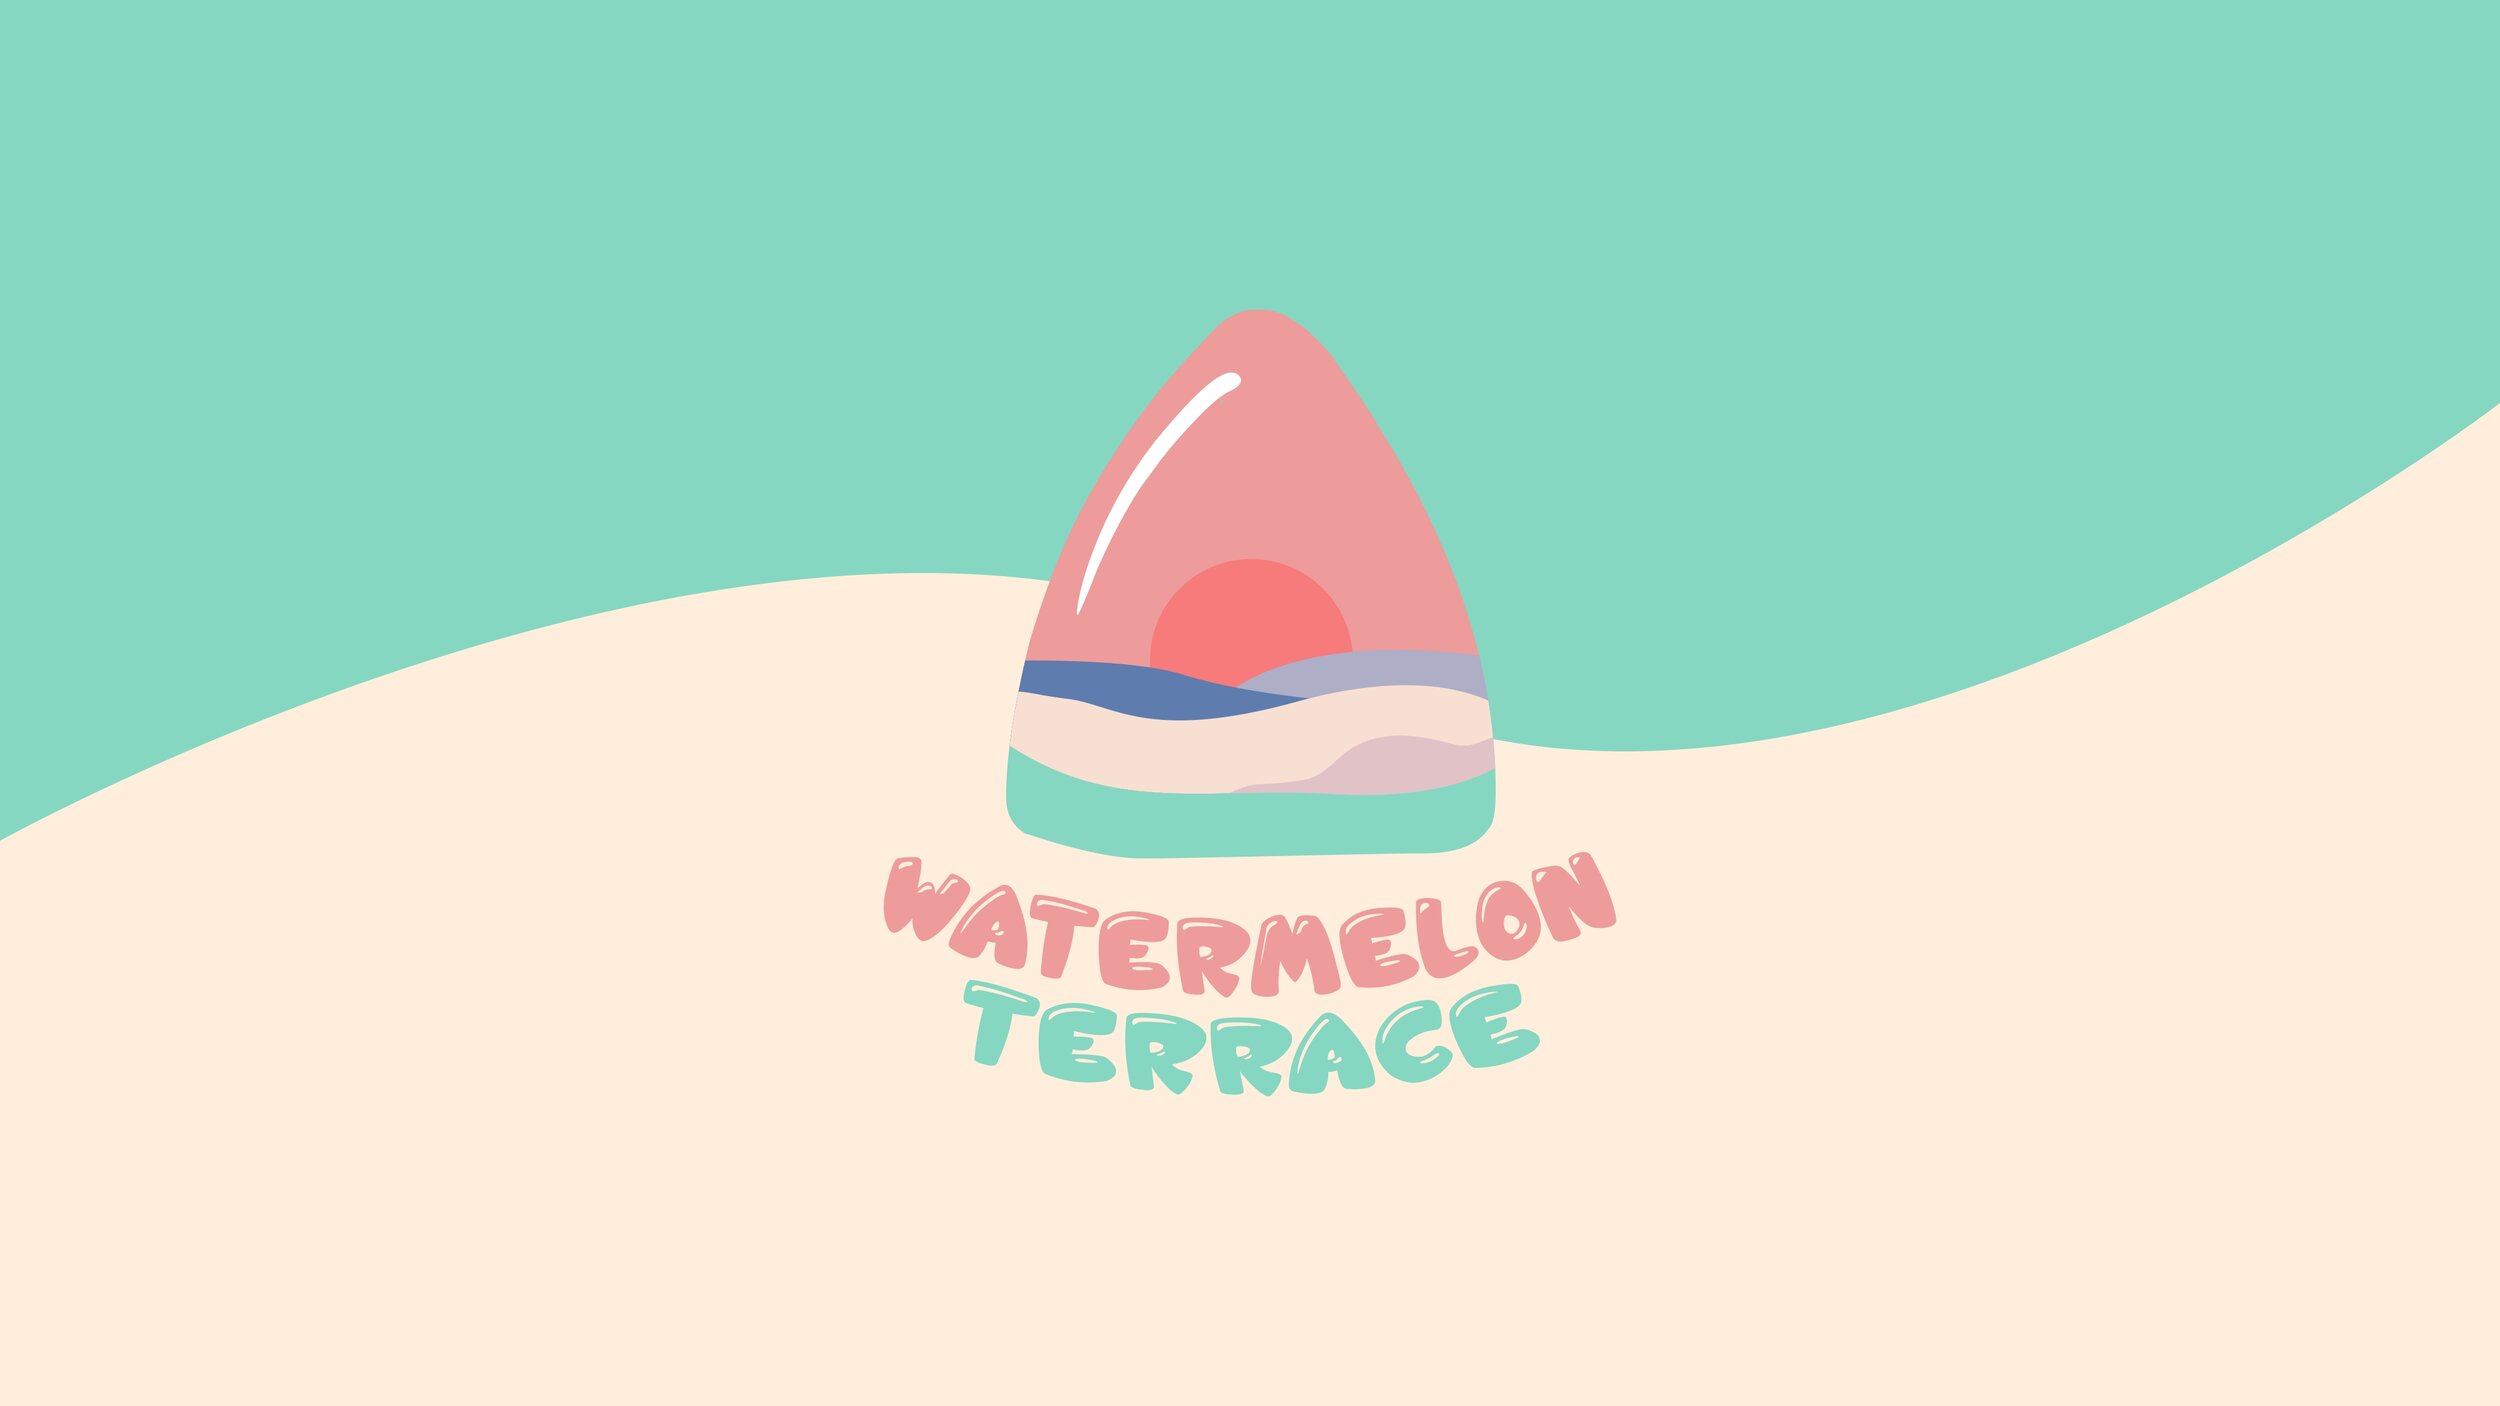 WatermelonTerrace_Deck_V1_compressed (1)_page-0001.jpg